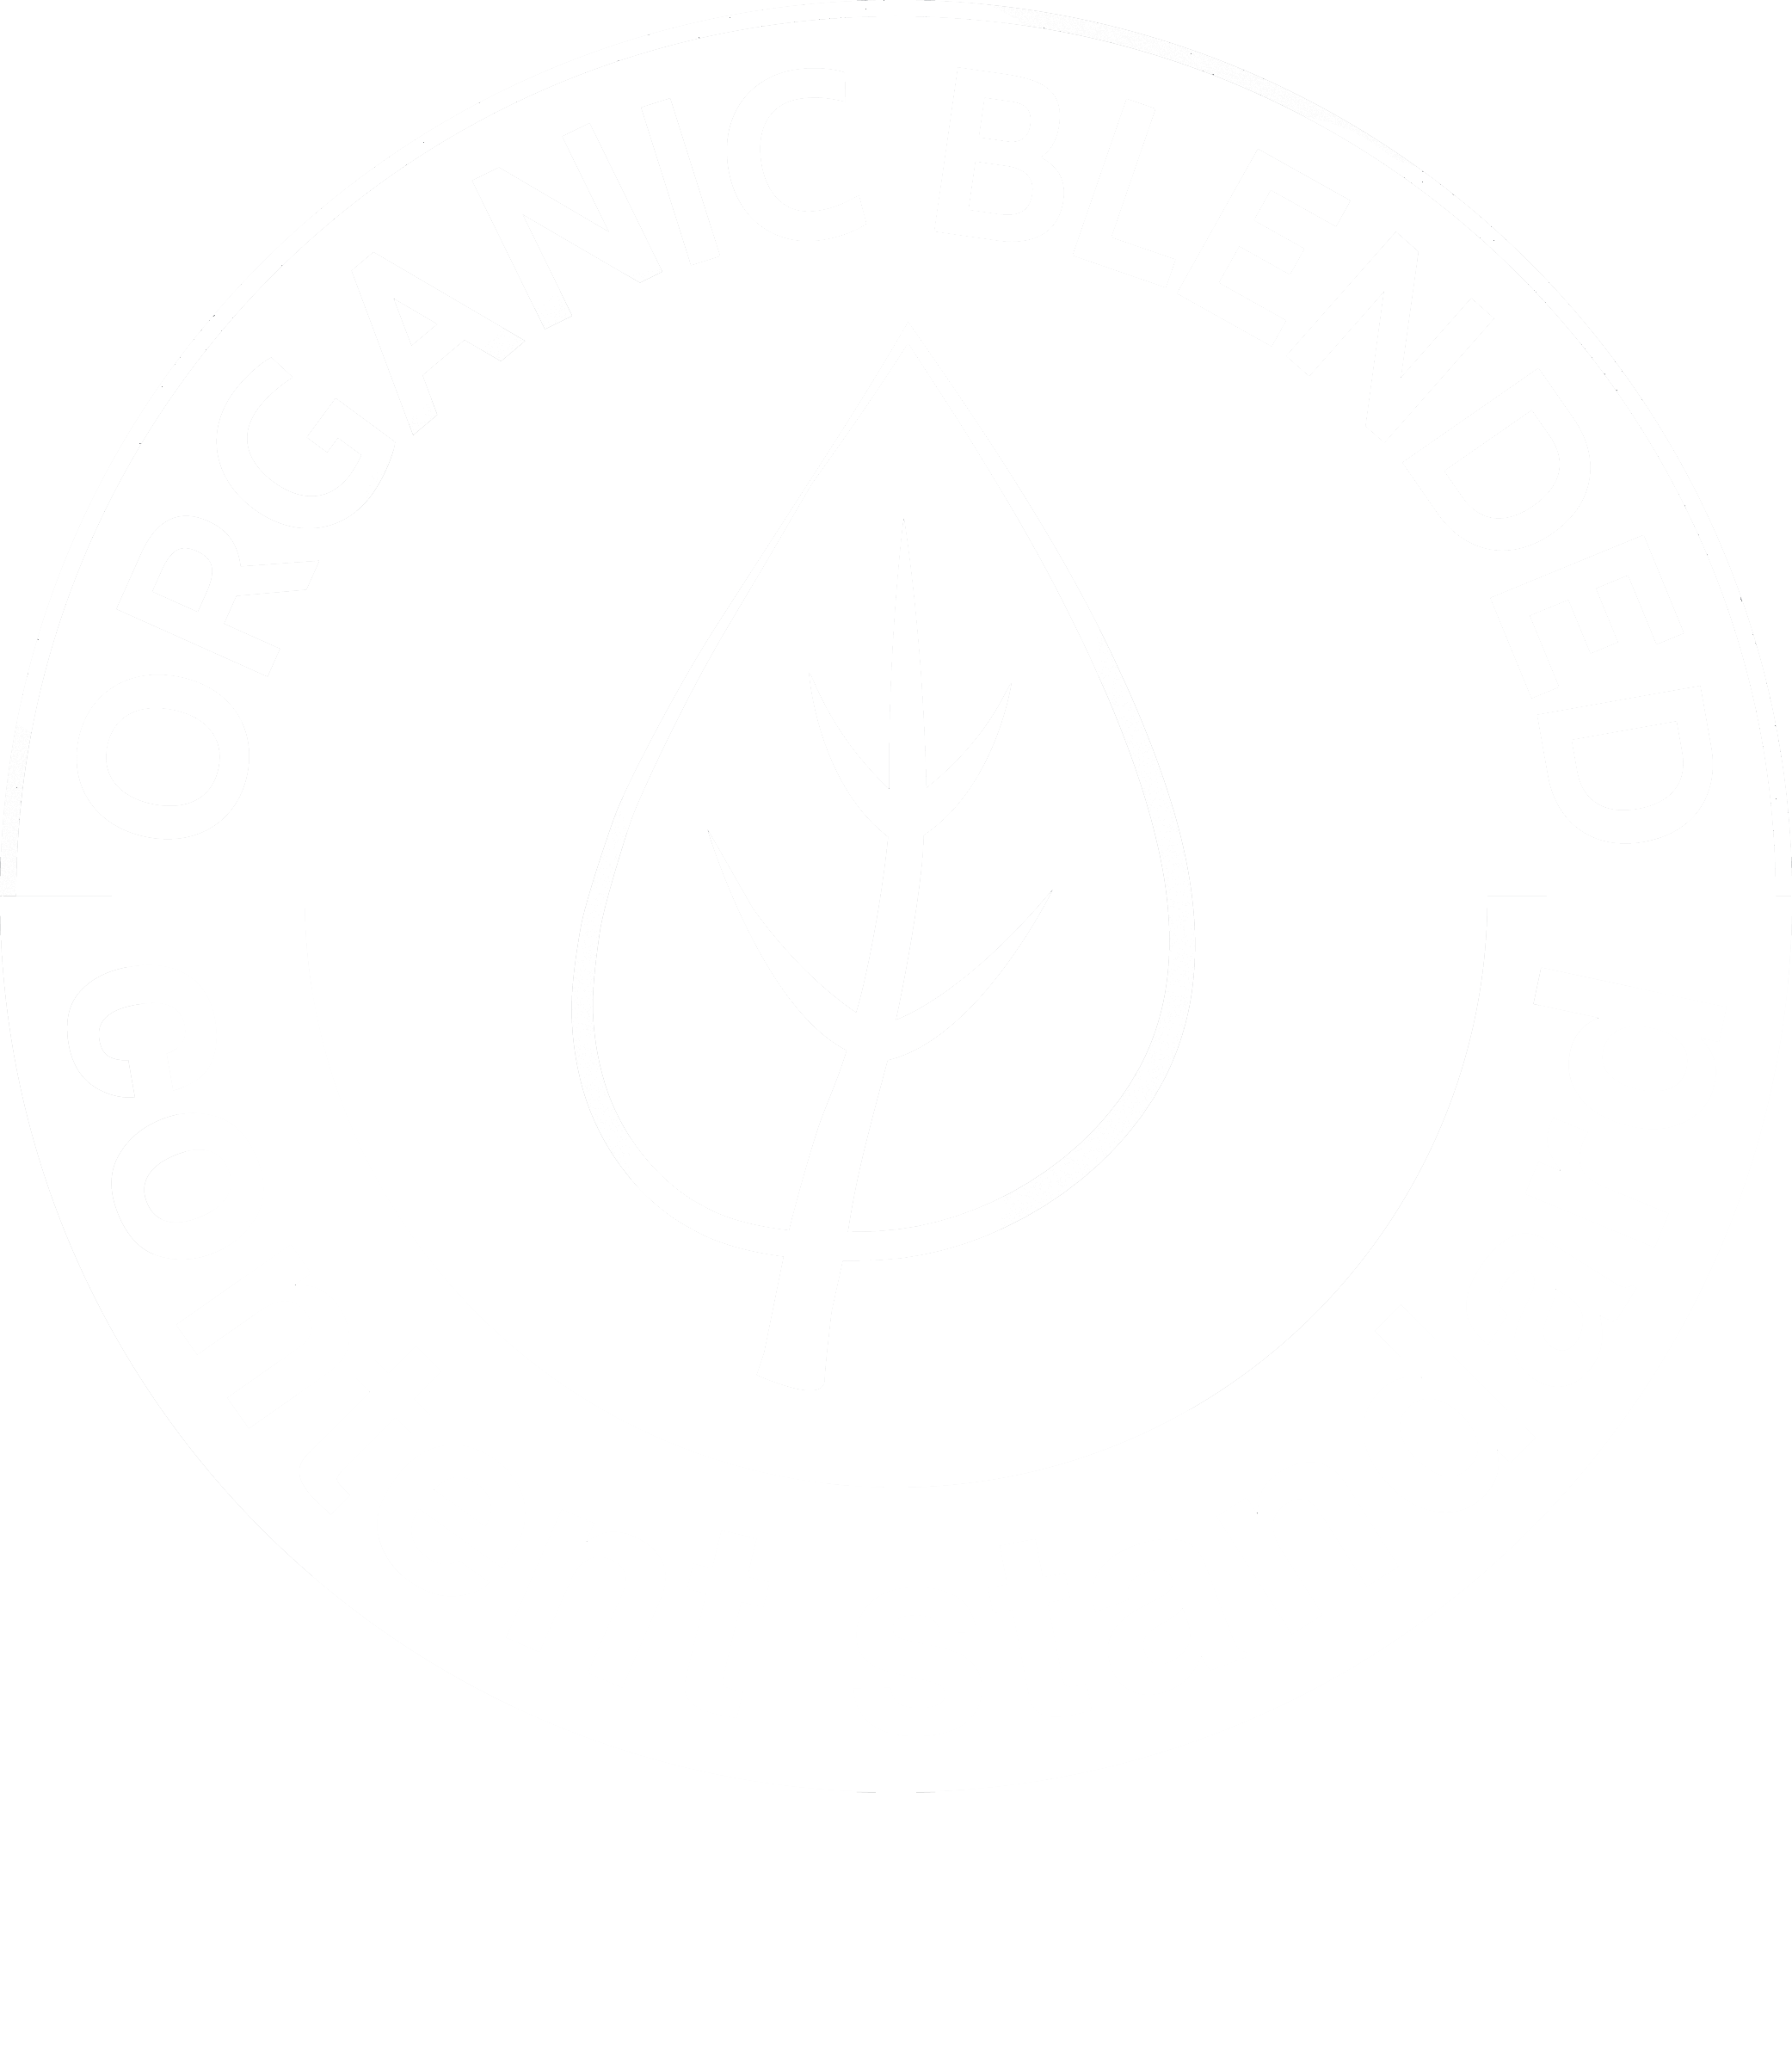 OCS – Organic Content Standard